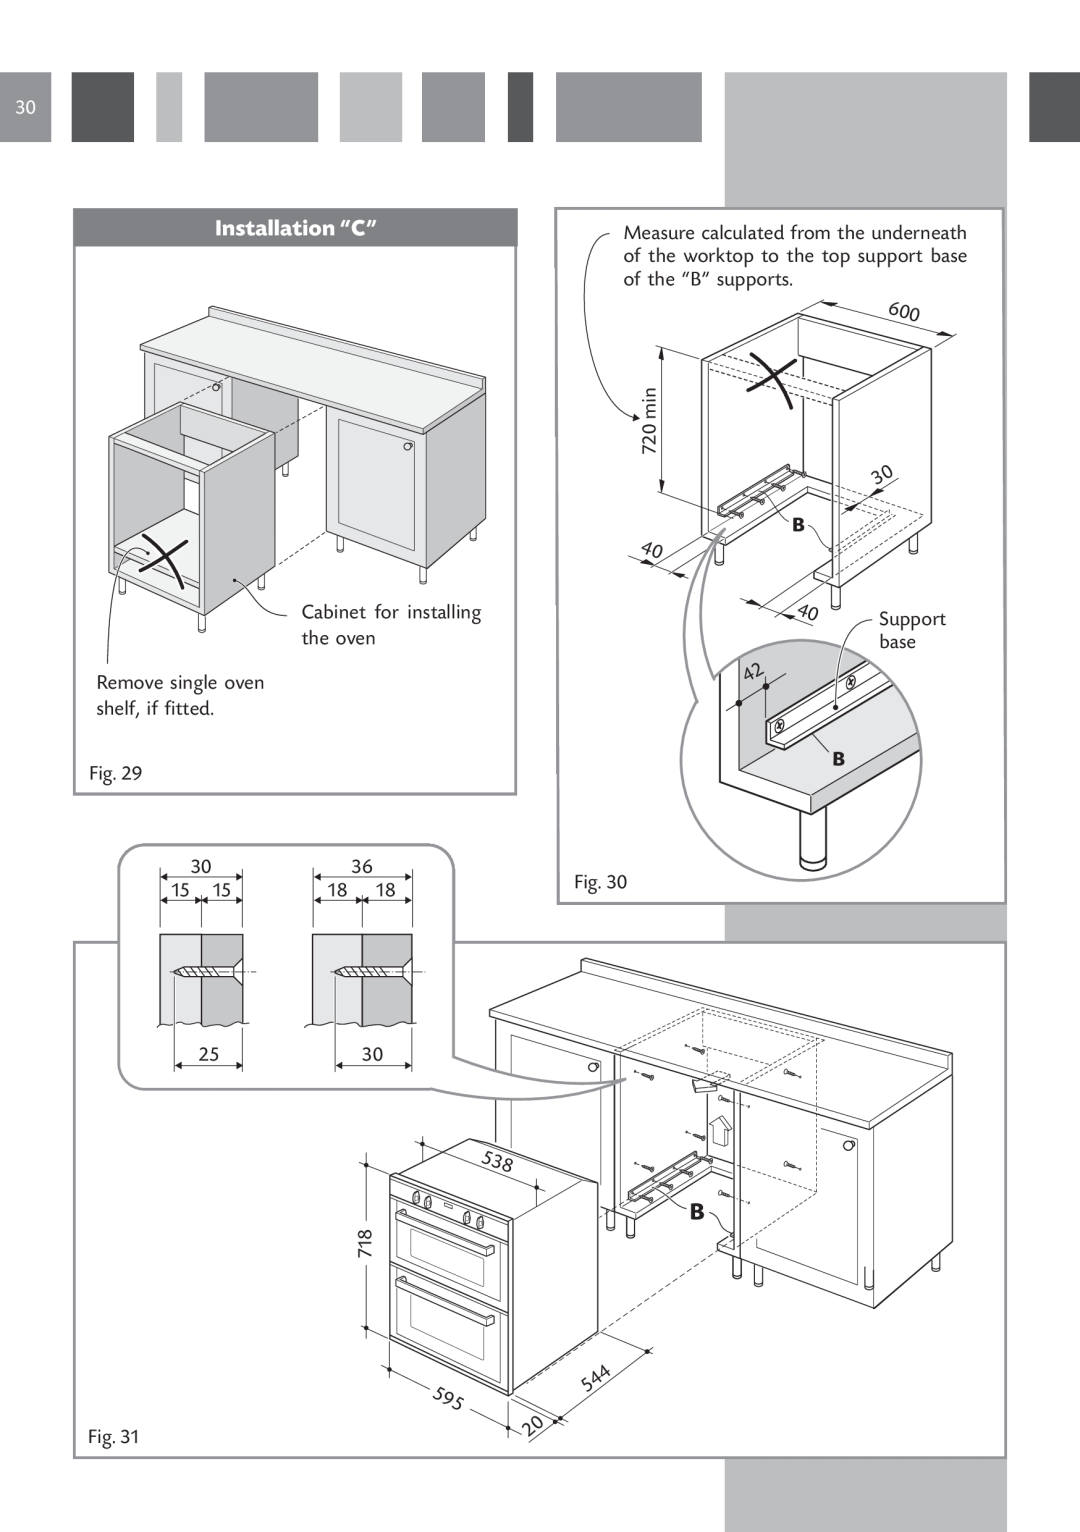 CDA DV 710 manual Installation “C”, Cabinet for installing, Support 